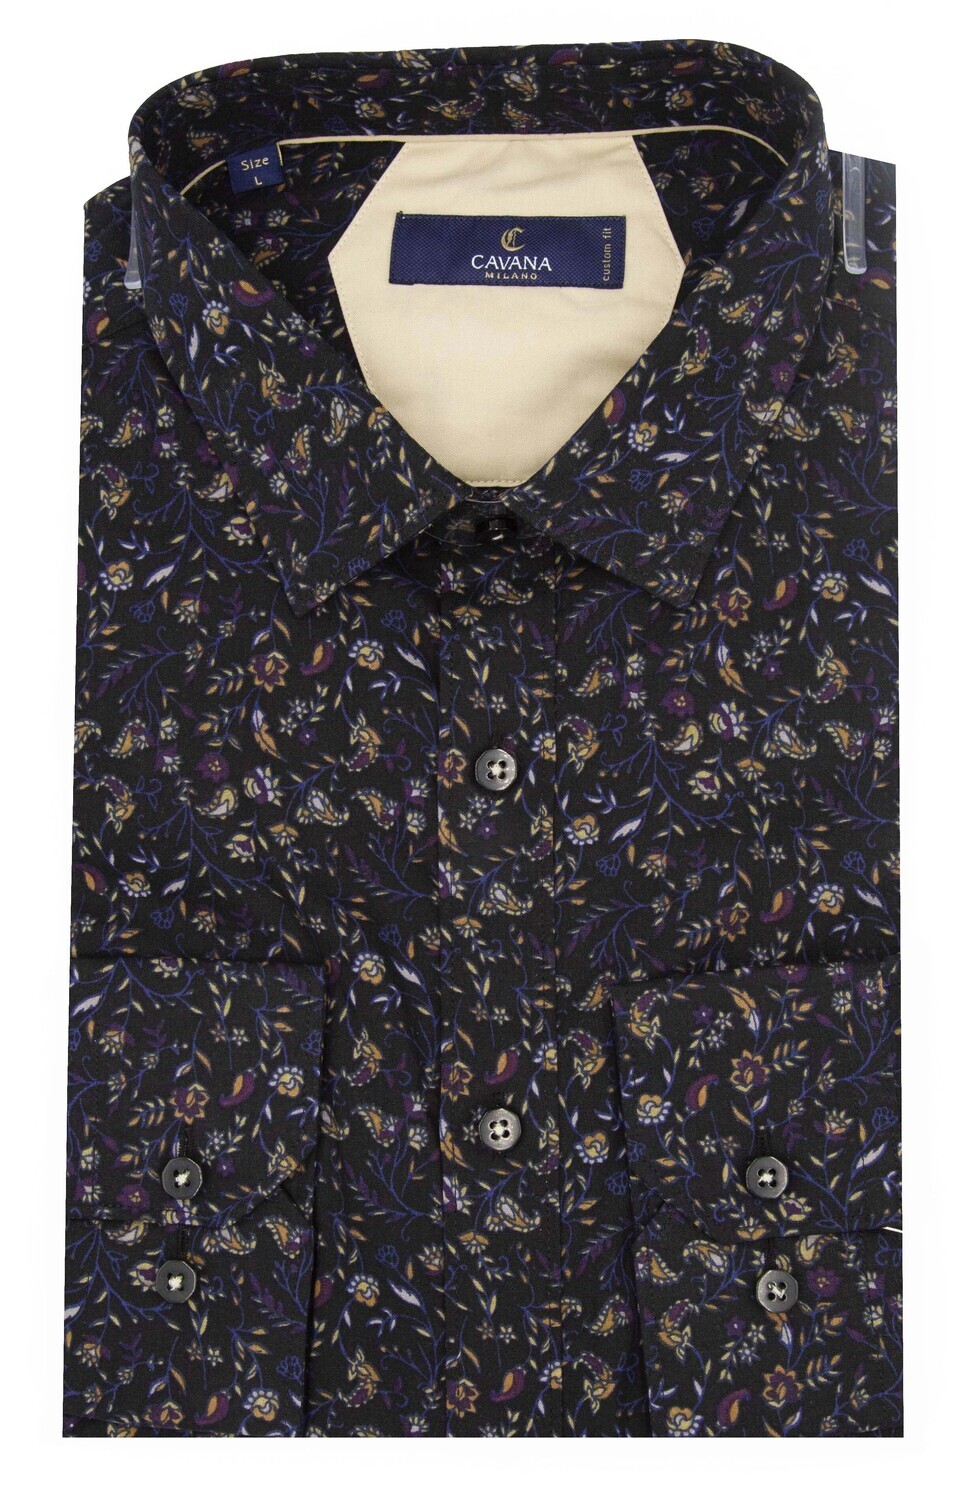 Printed Floral Shirt For Men